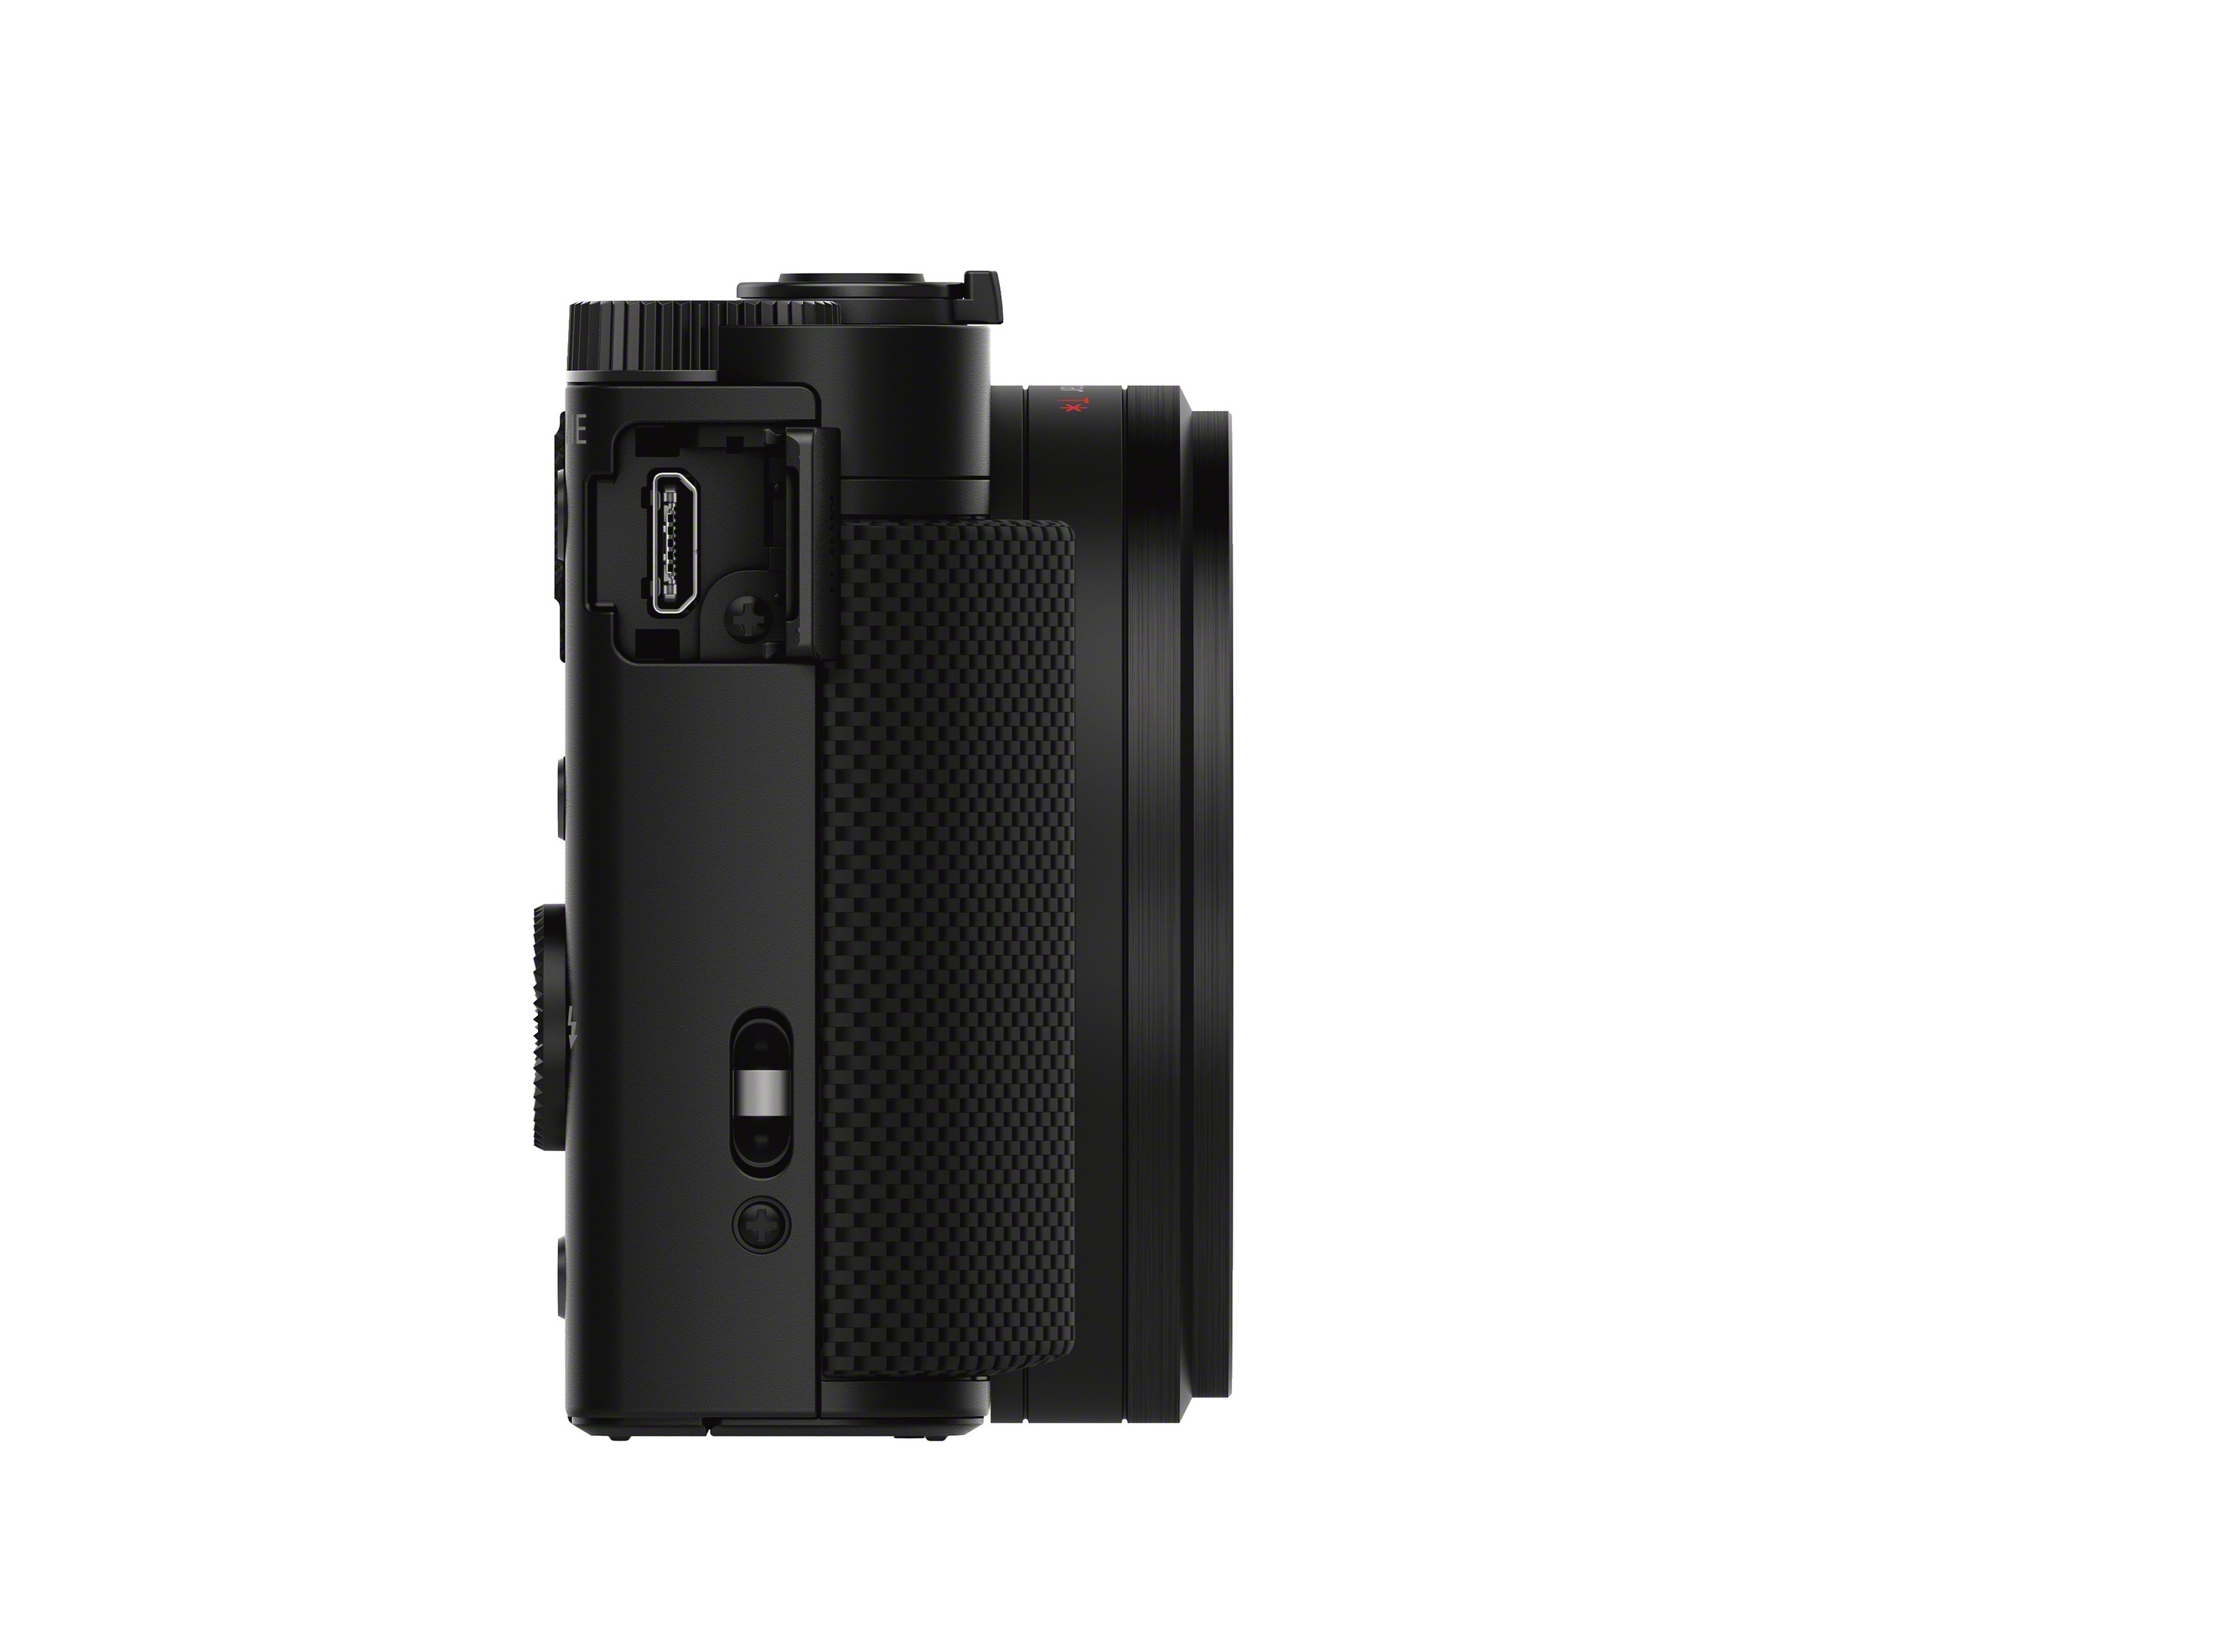 Zeiss Cyber-shot NFC opt. Fine Schwarz, WLAN Digitalkamera , 30x SONY LCD, DSC-HX80 Xtra Zoom,